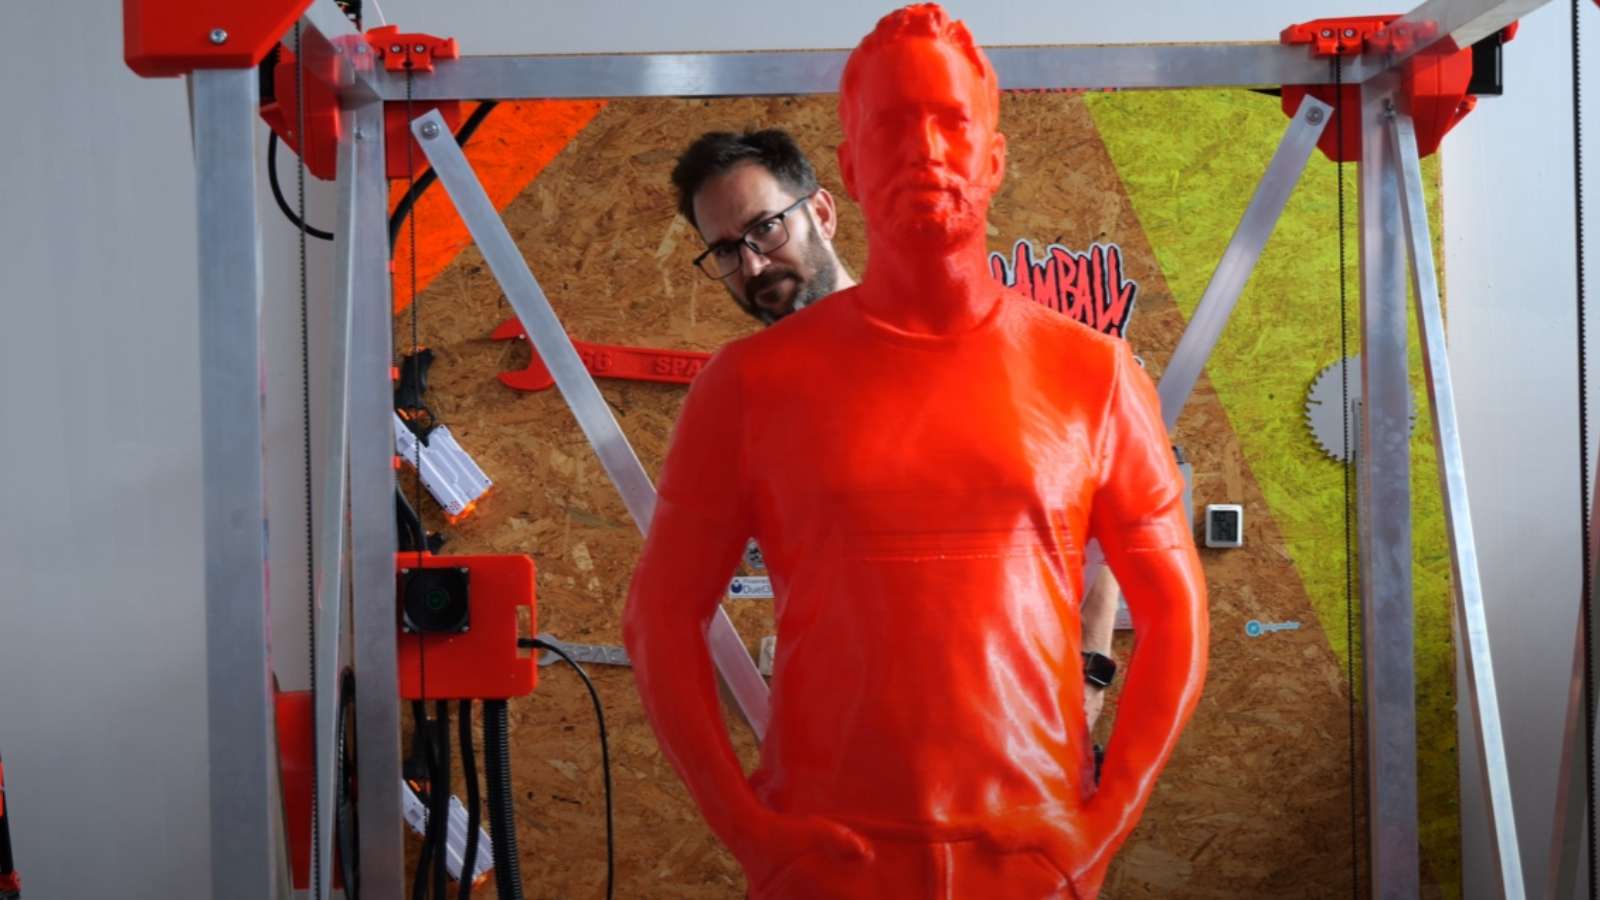 Youtuber stood behind red 3D printed clone of himself